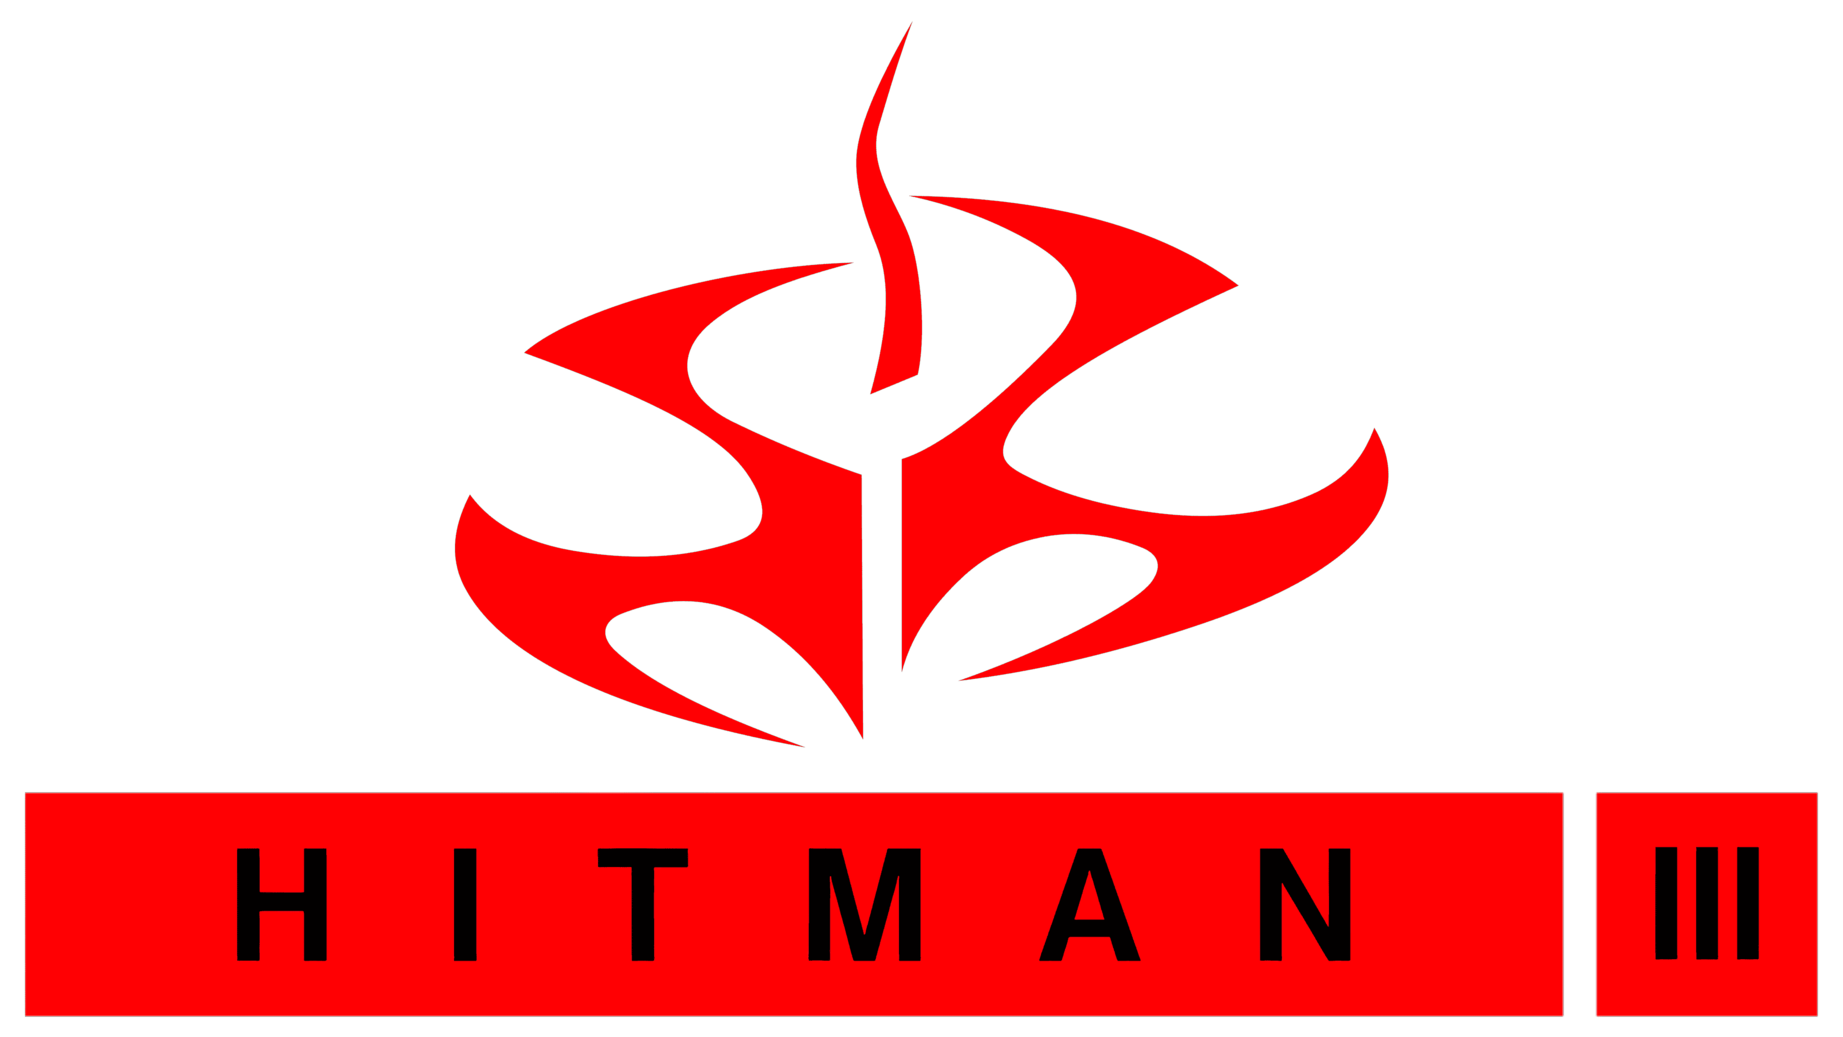 Hitman sign